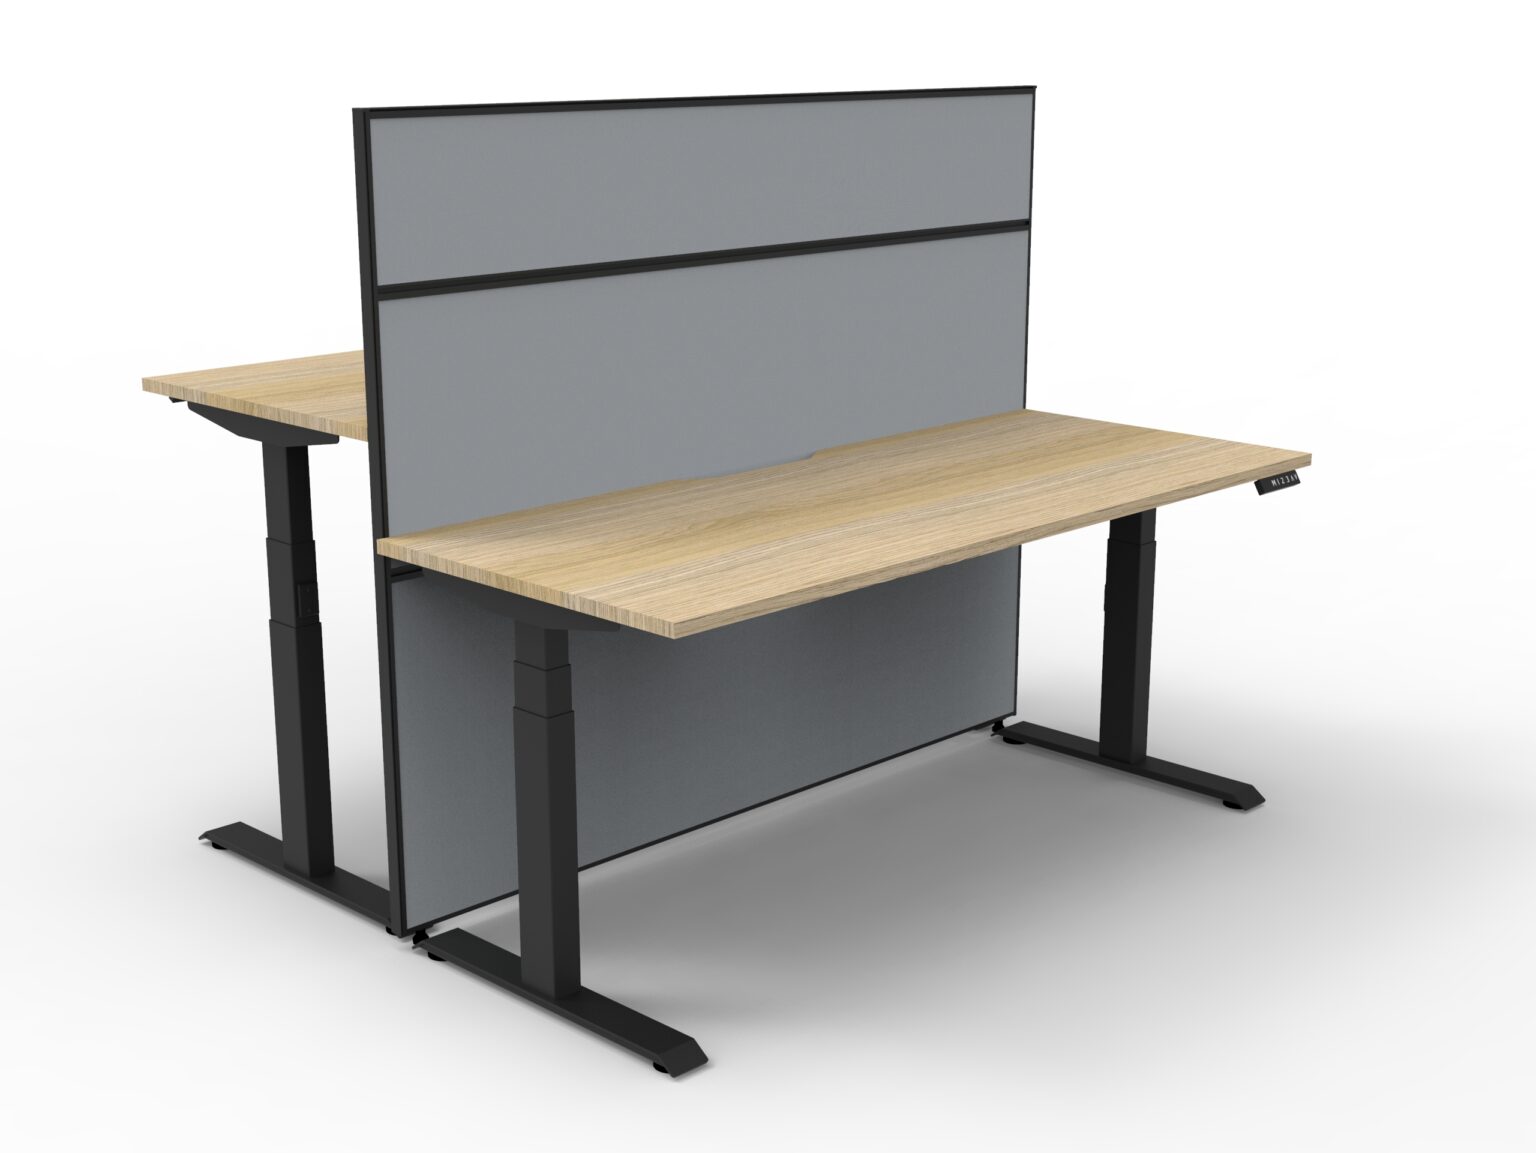 SHUSH30 with Height Adjustable Desks